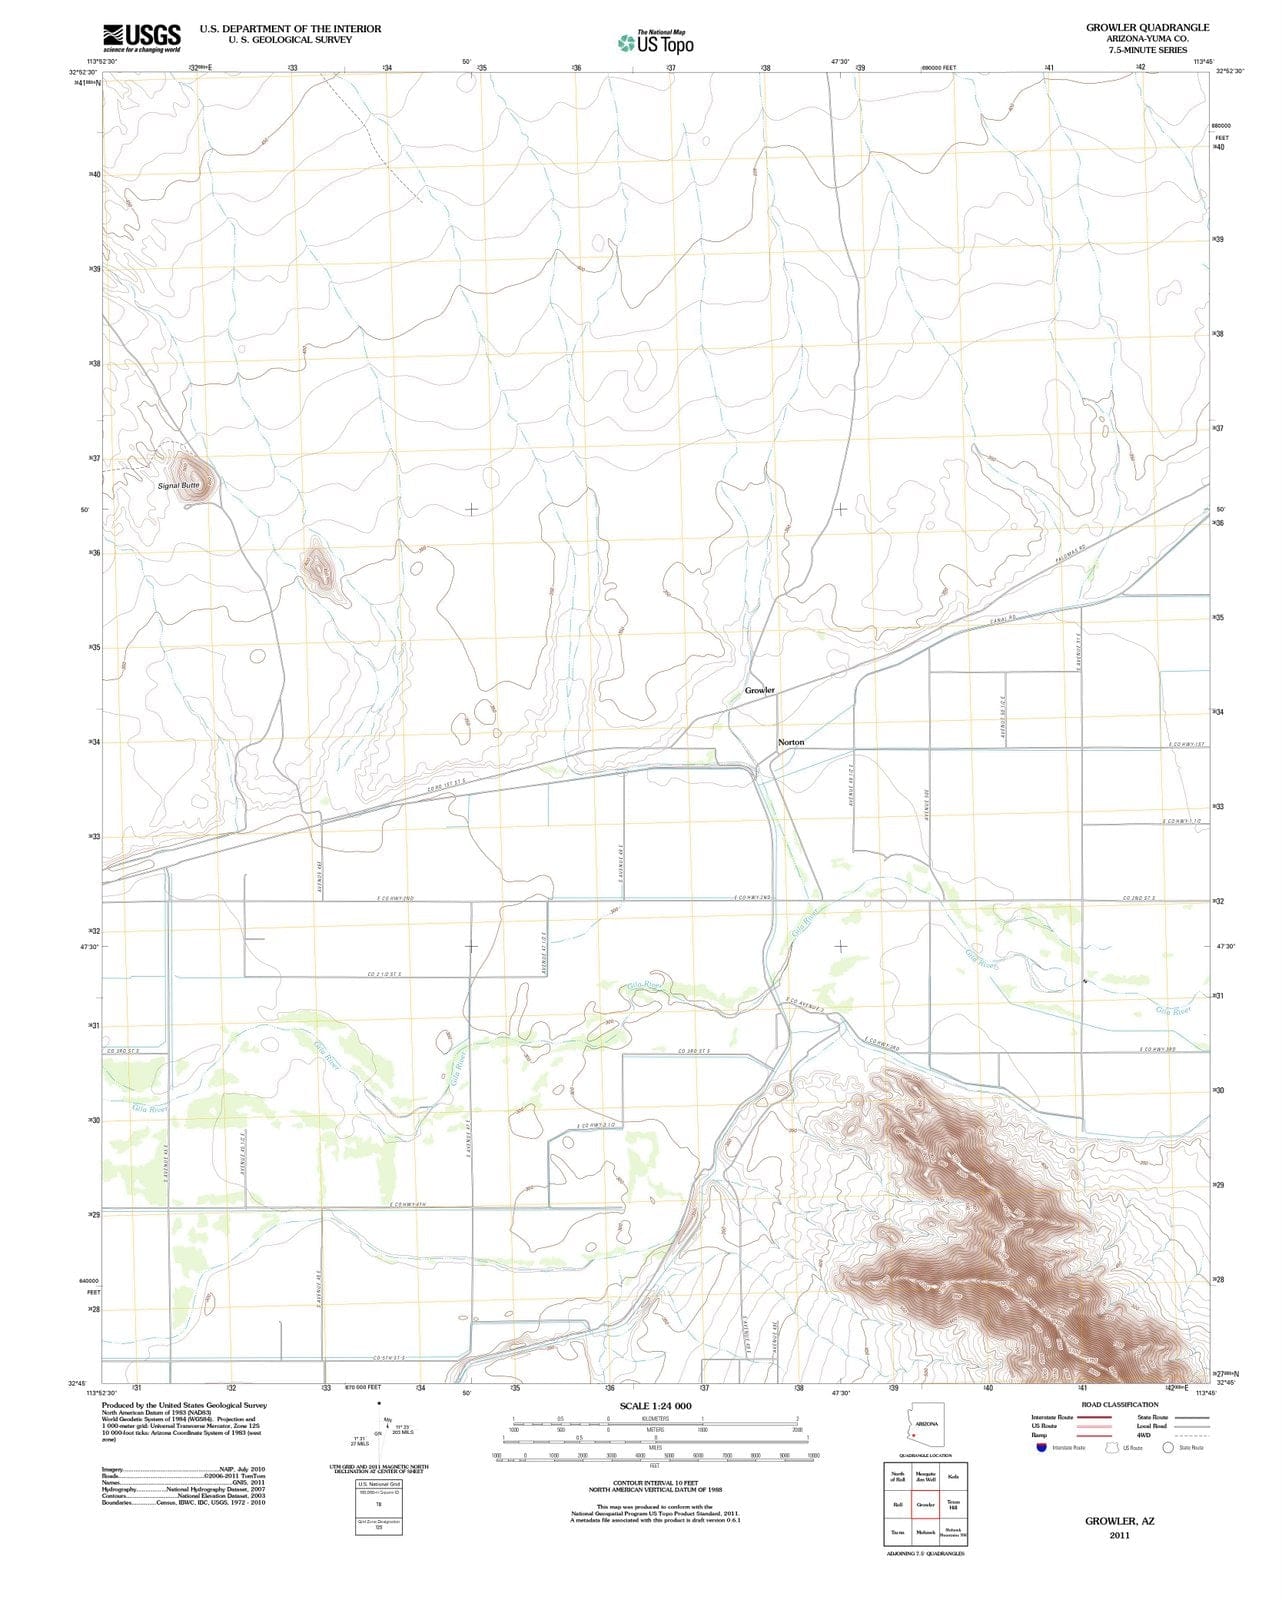 2011 Growler, AZ - Arizona - USGS Topographic Map